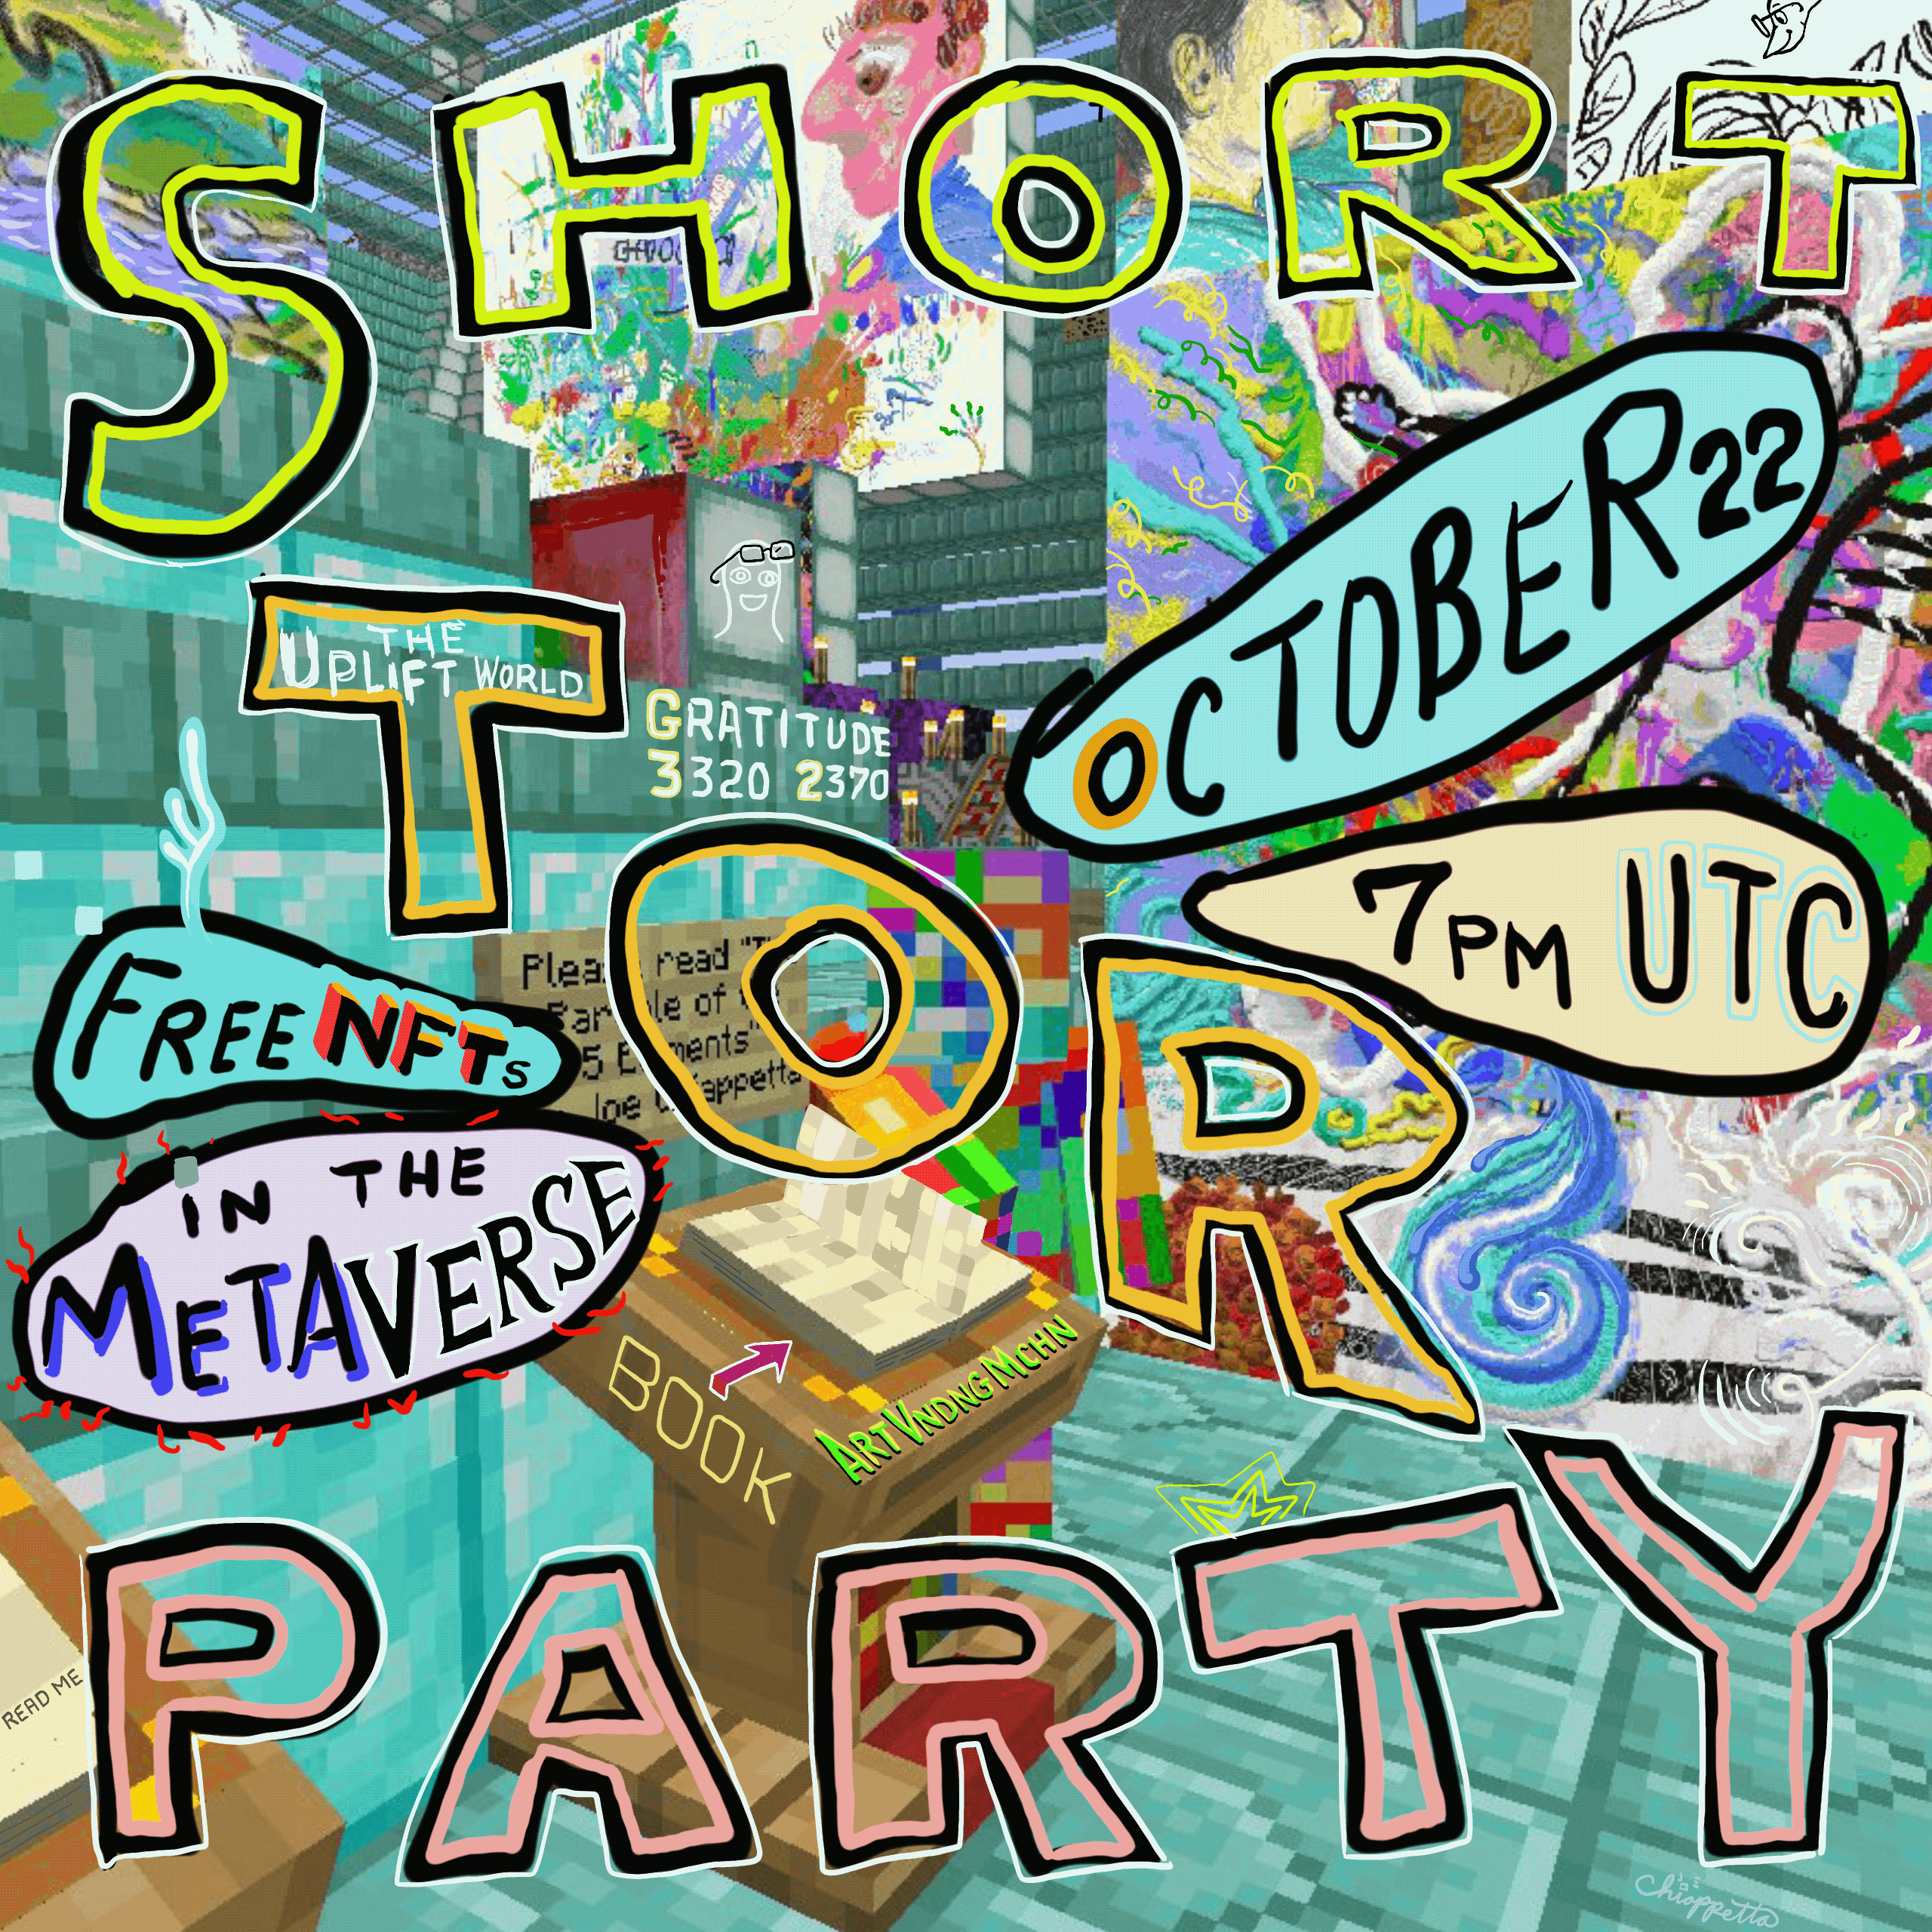 Short Story Party is rare digital art by Joe Chiappetta